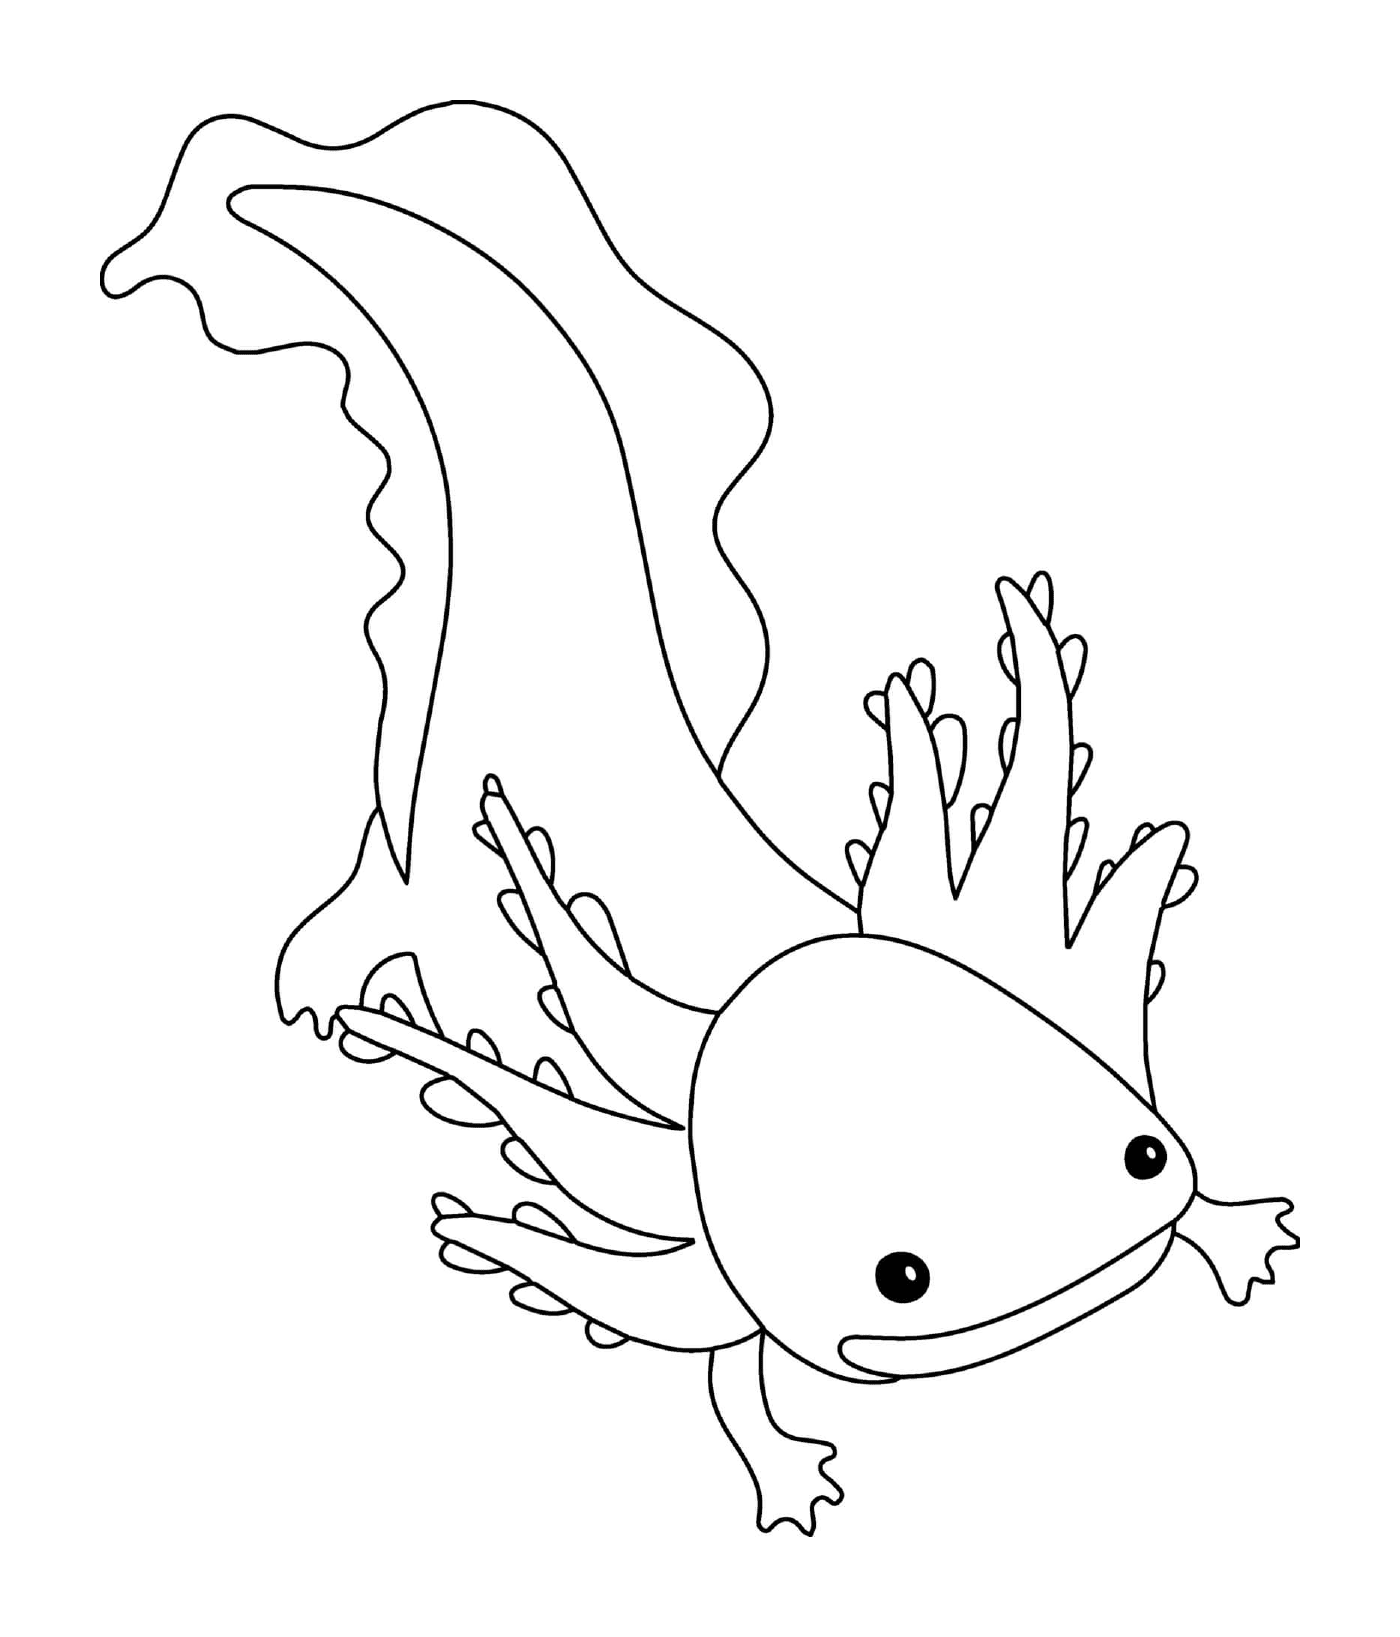  Axolotl nunca metamorfosificante 